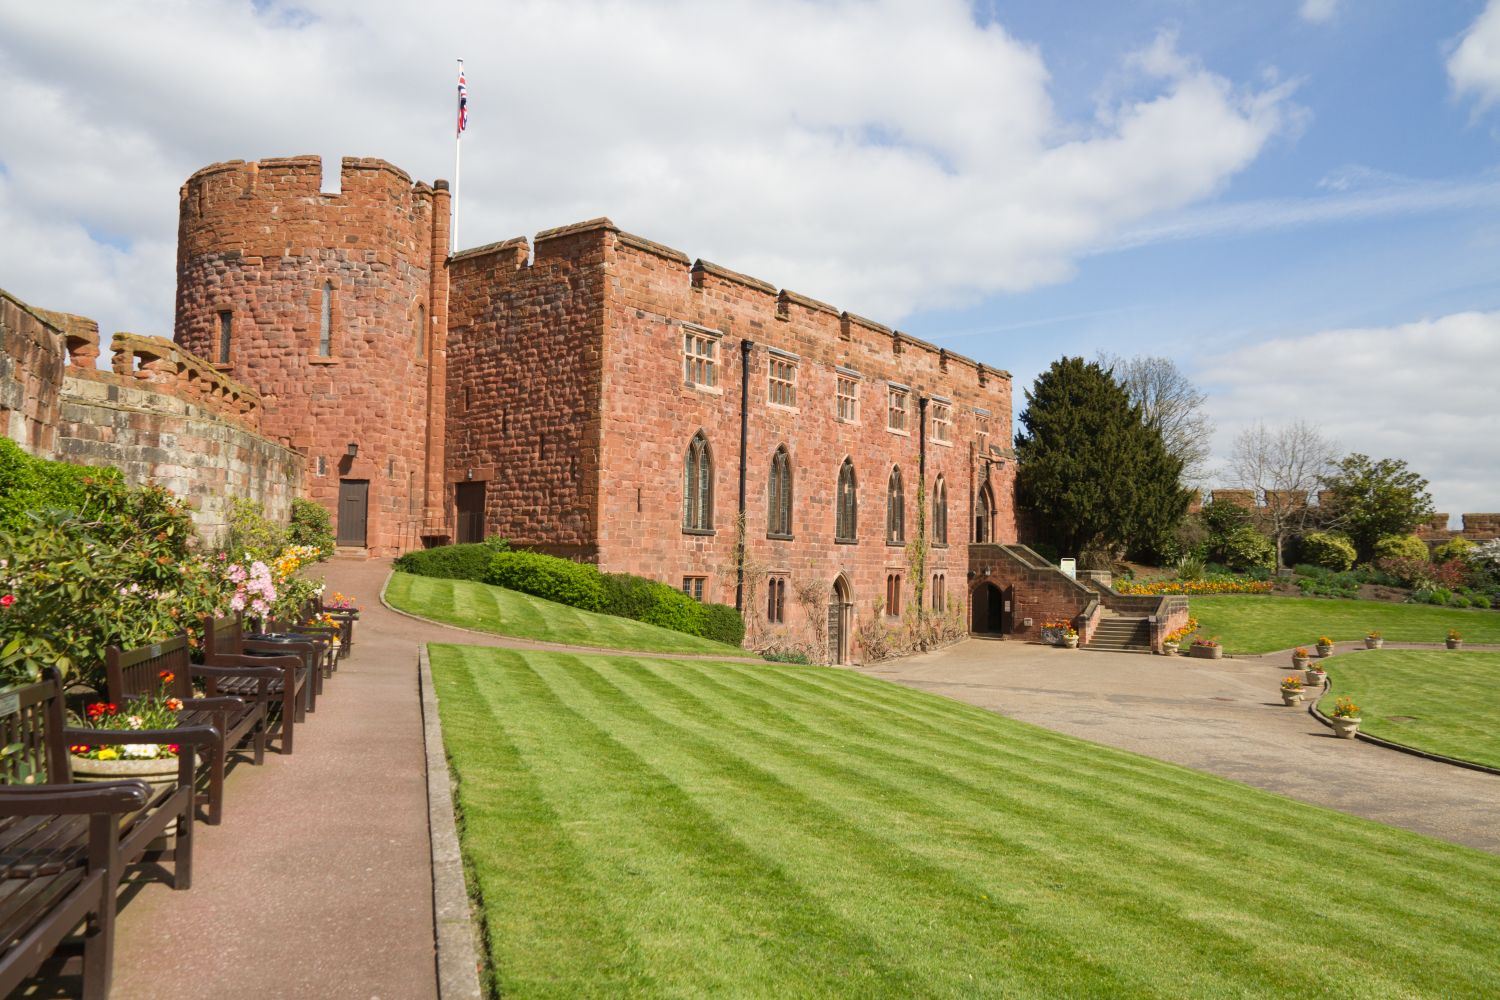 Shrewsbury castle and public gardens